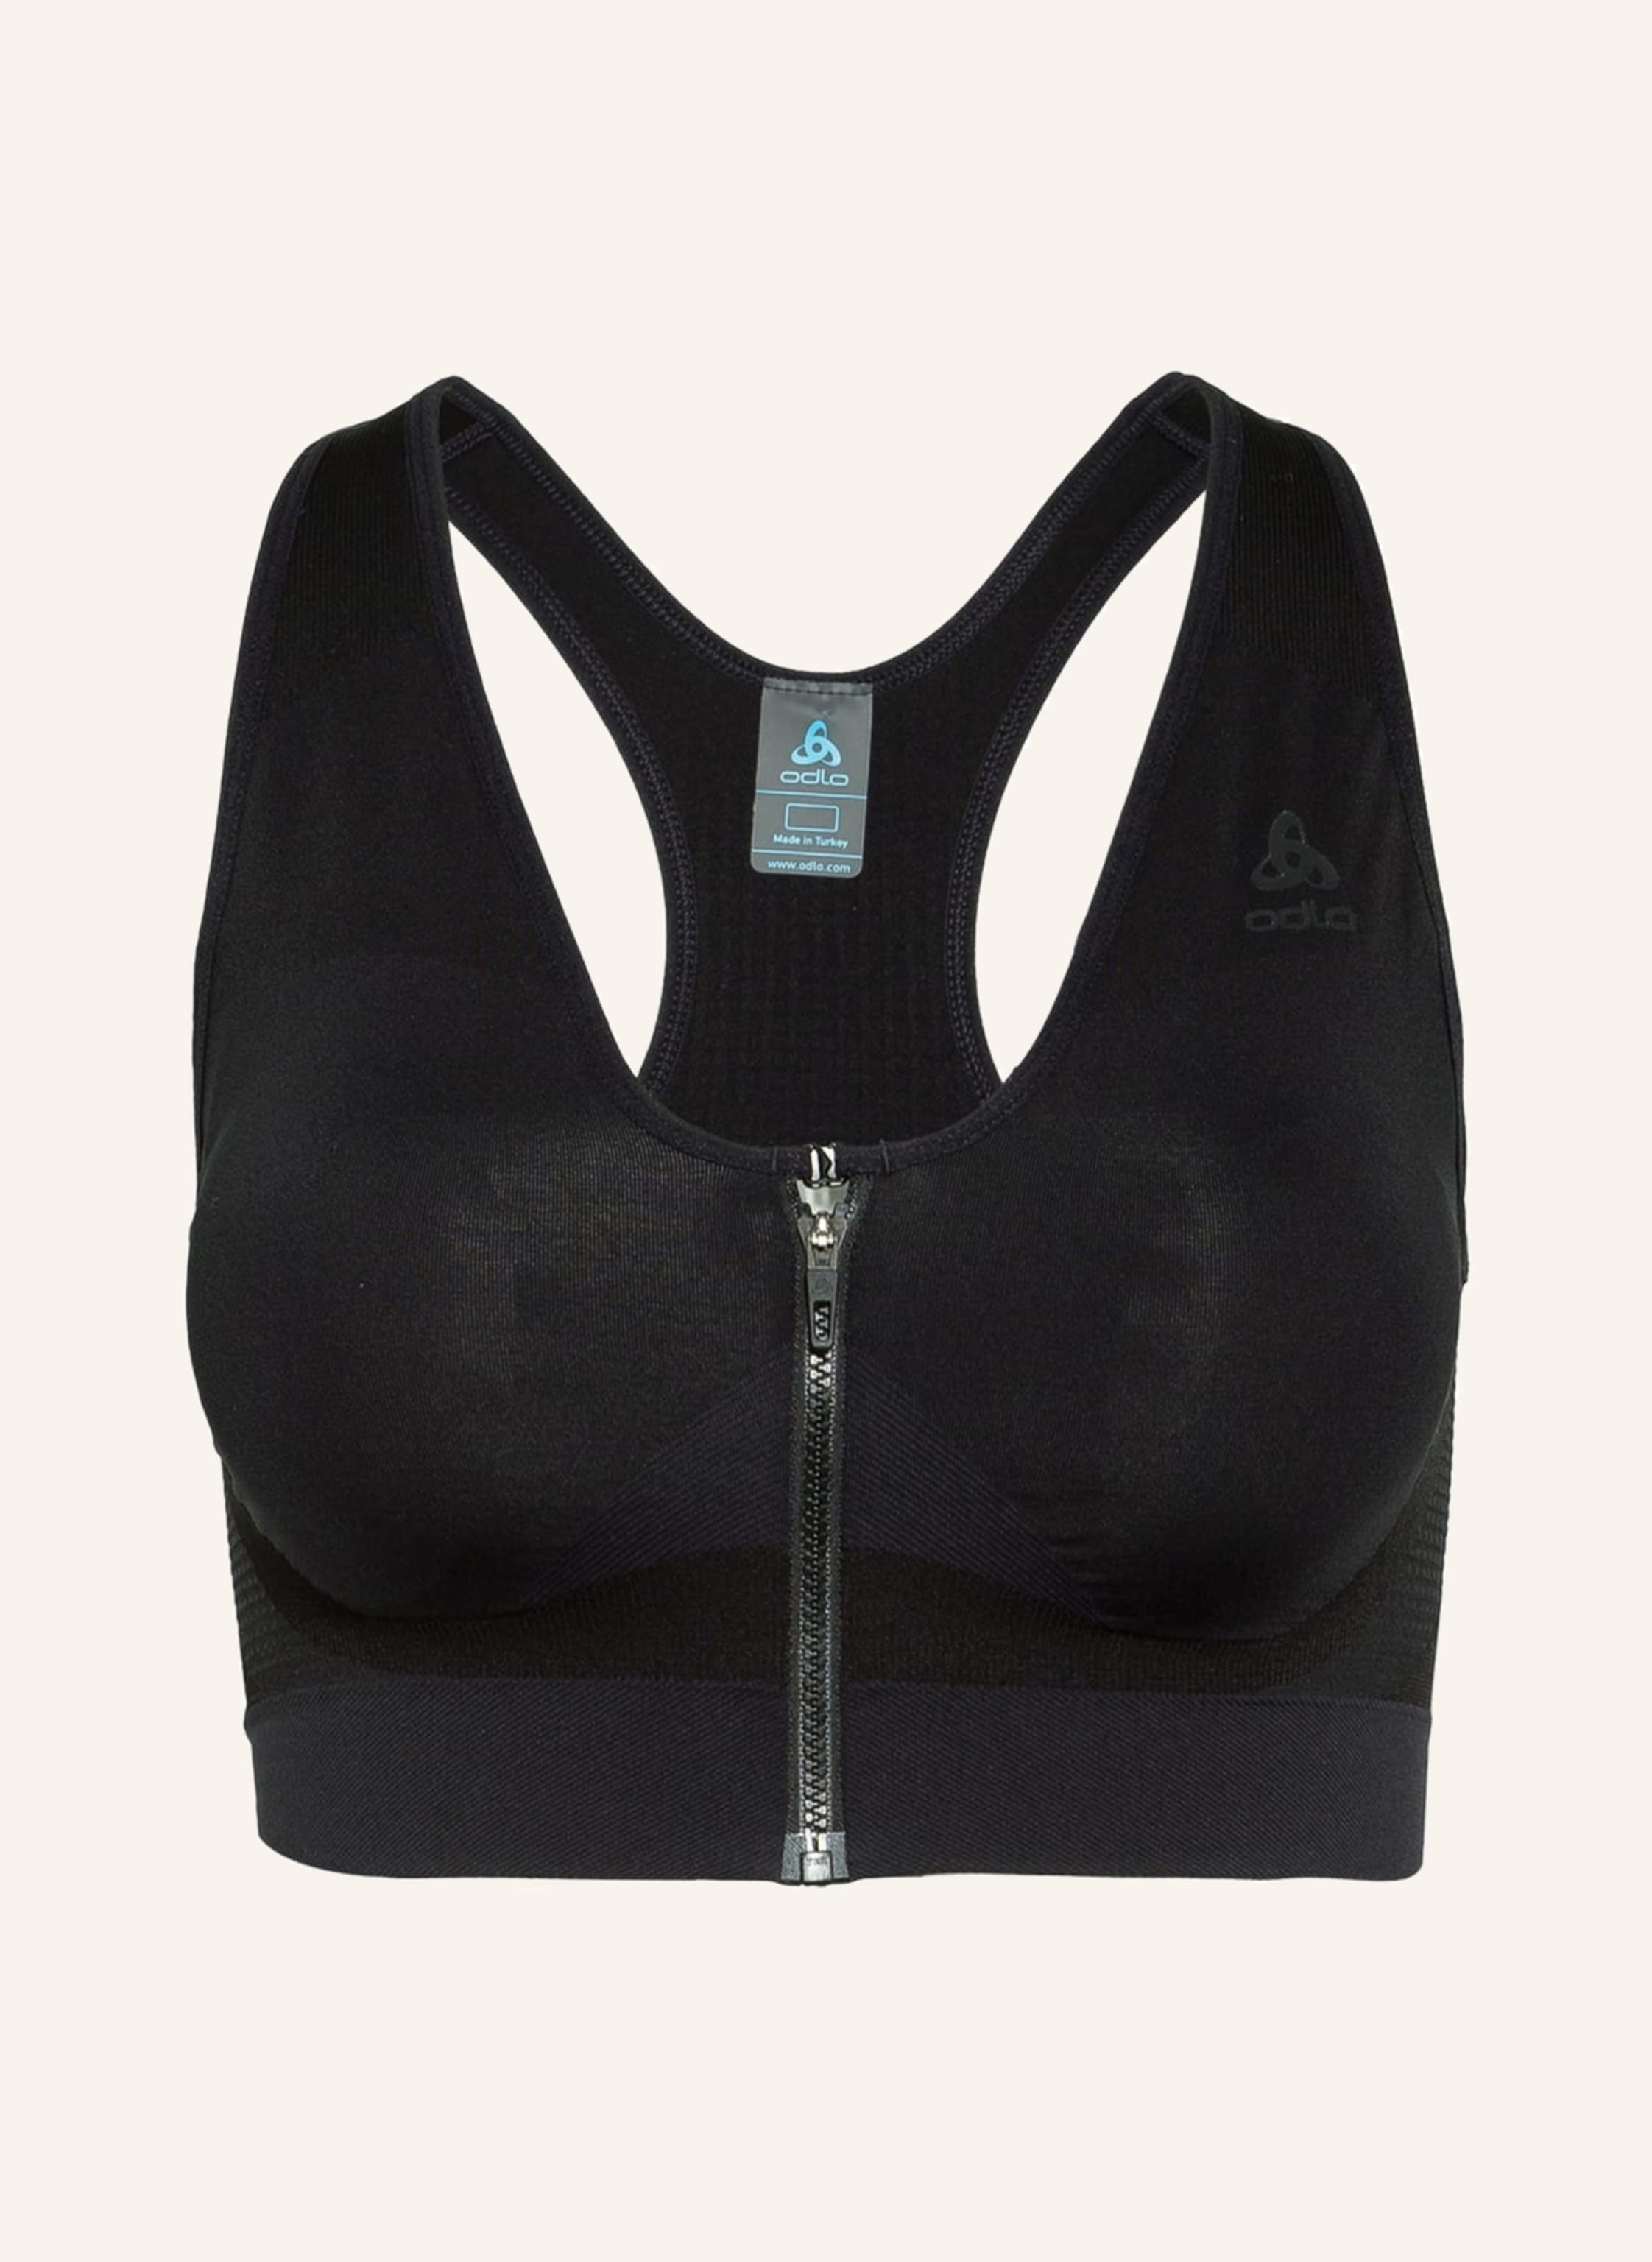 Odlo - Women's Sports Bra Seamless High - Sports bra - Dark Slate / Arctic  | M